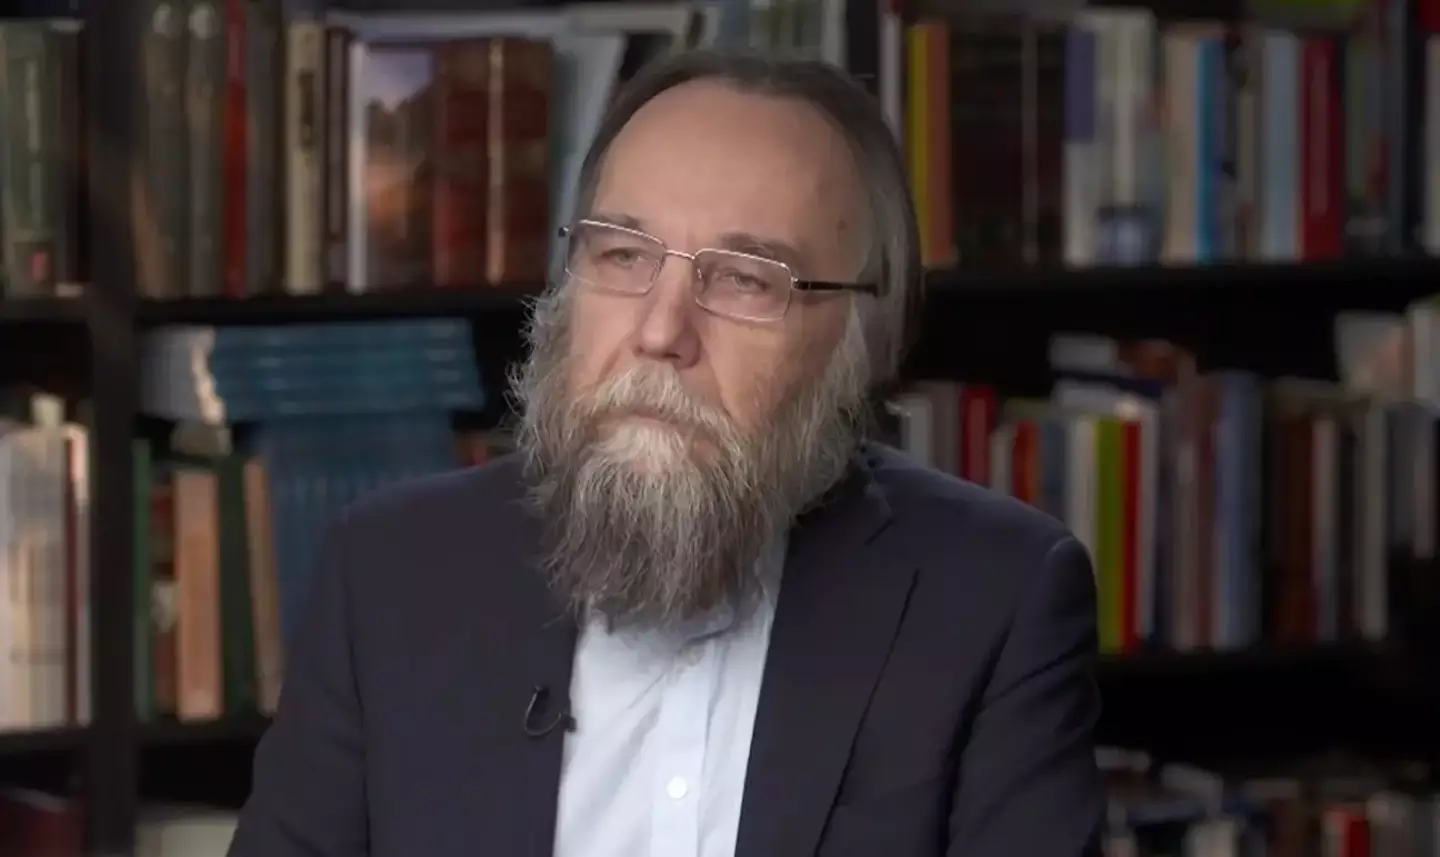 Alexander Dugin is said to be an ally to Vladimir Putin.